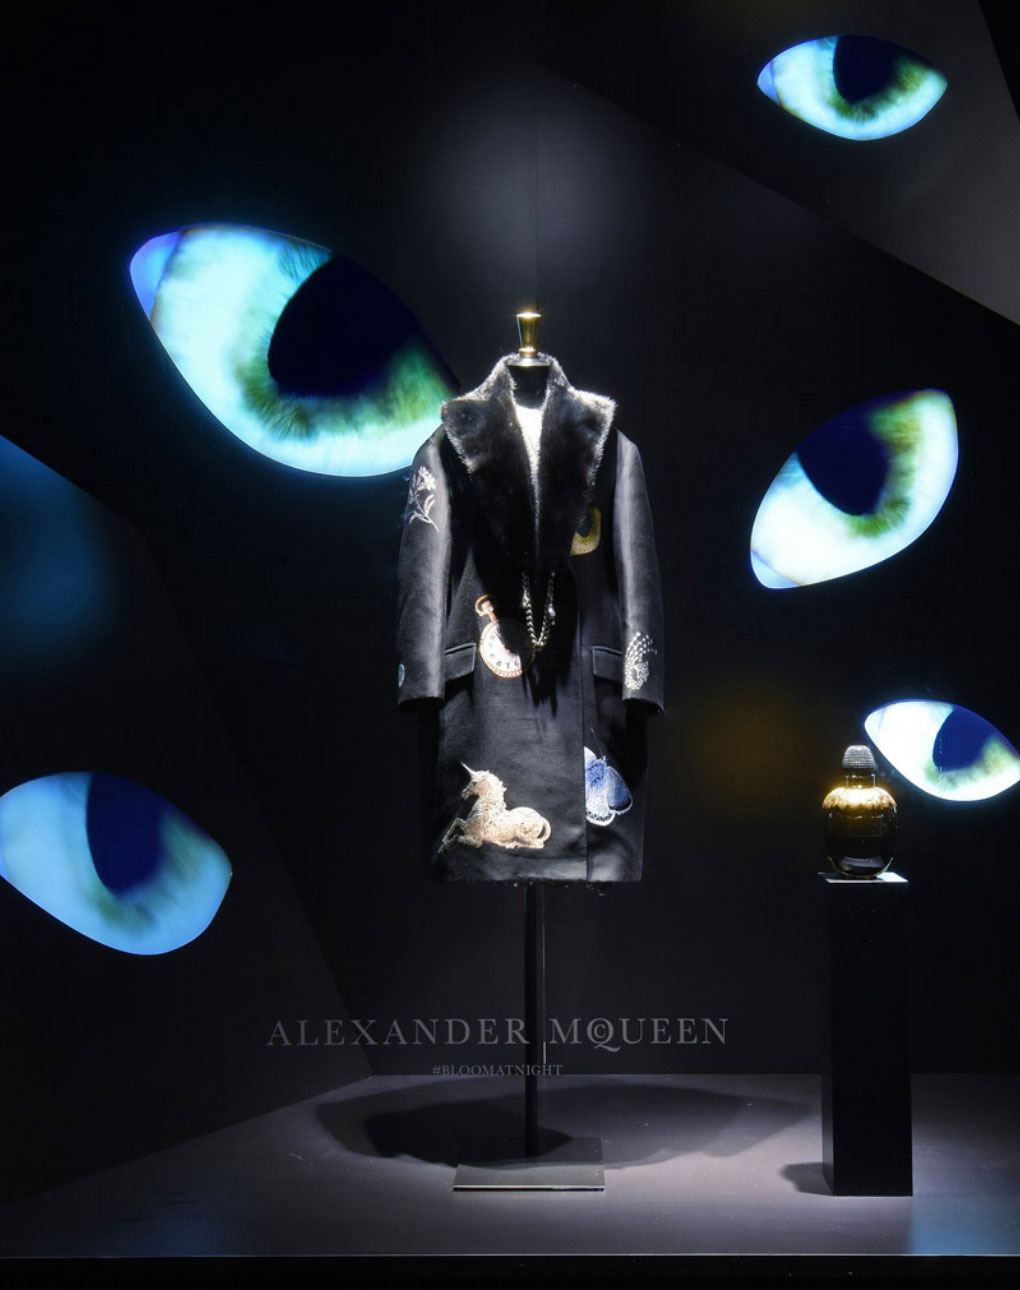 Alexander McQueen - Bloom at Night at Saks Fifth Avenue